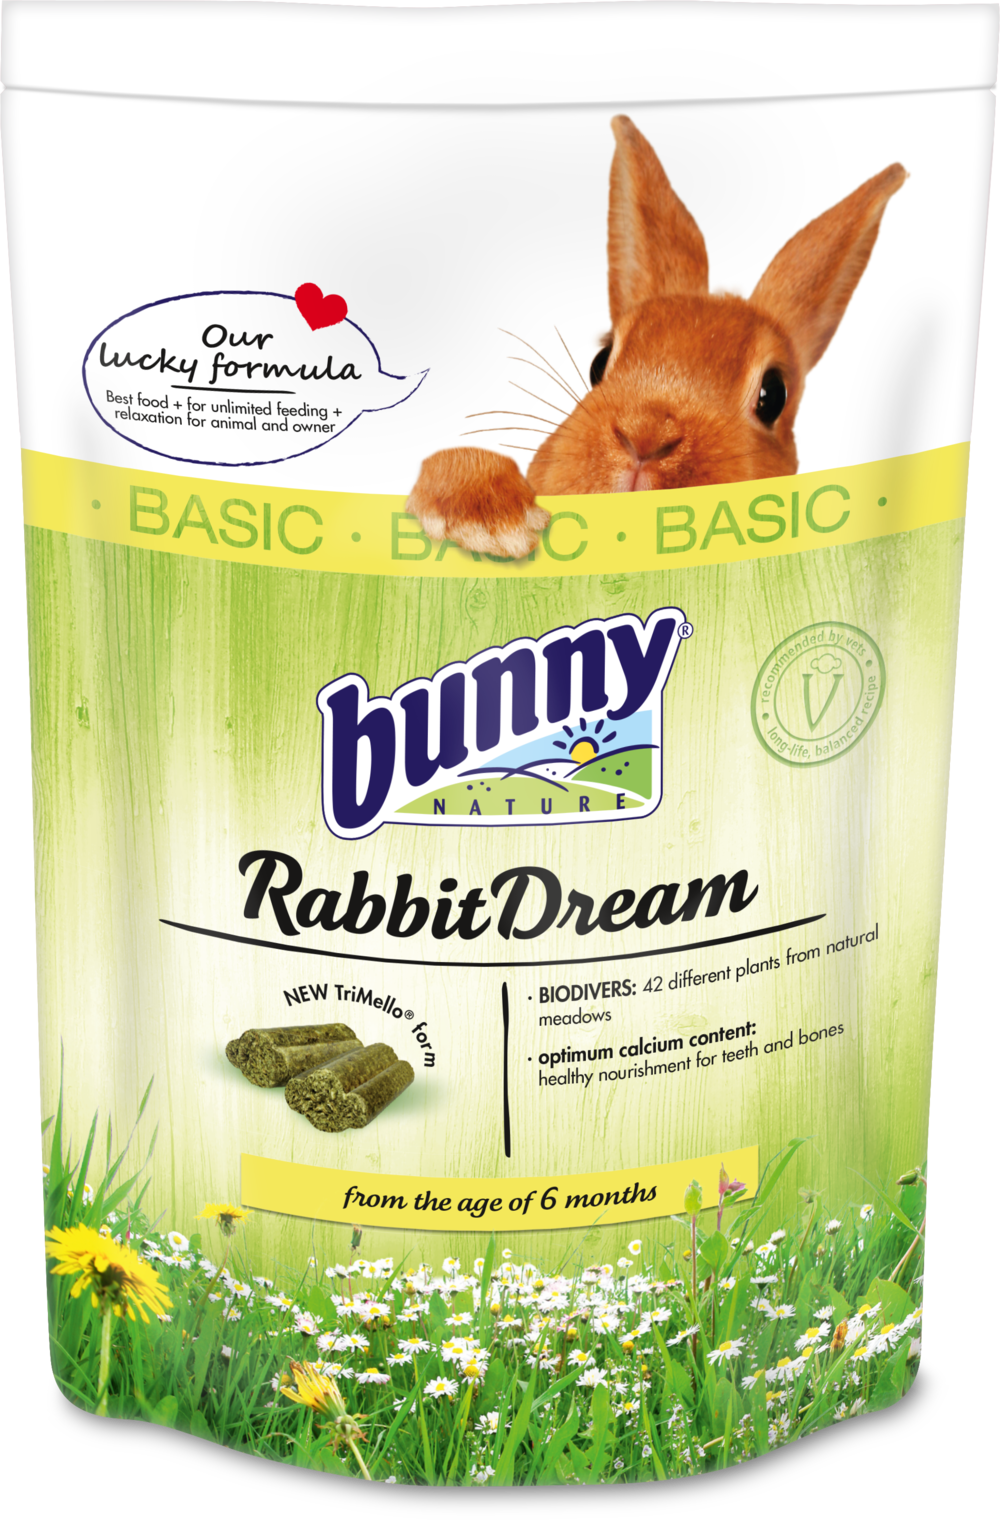 Bunny Nature - Dream Basic Rabbit